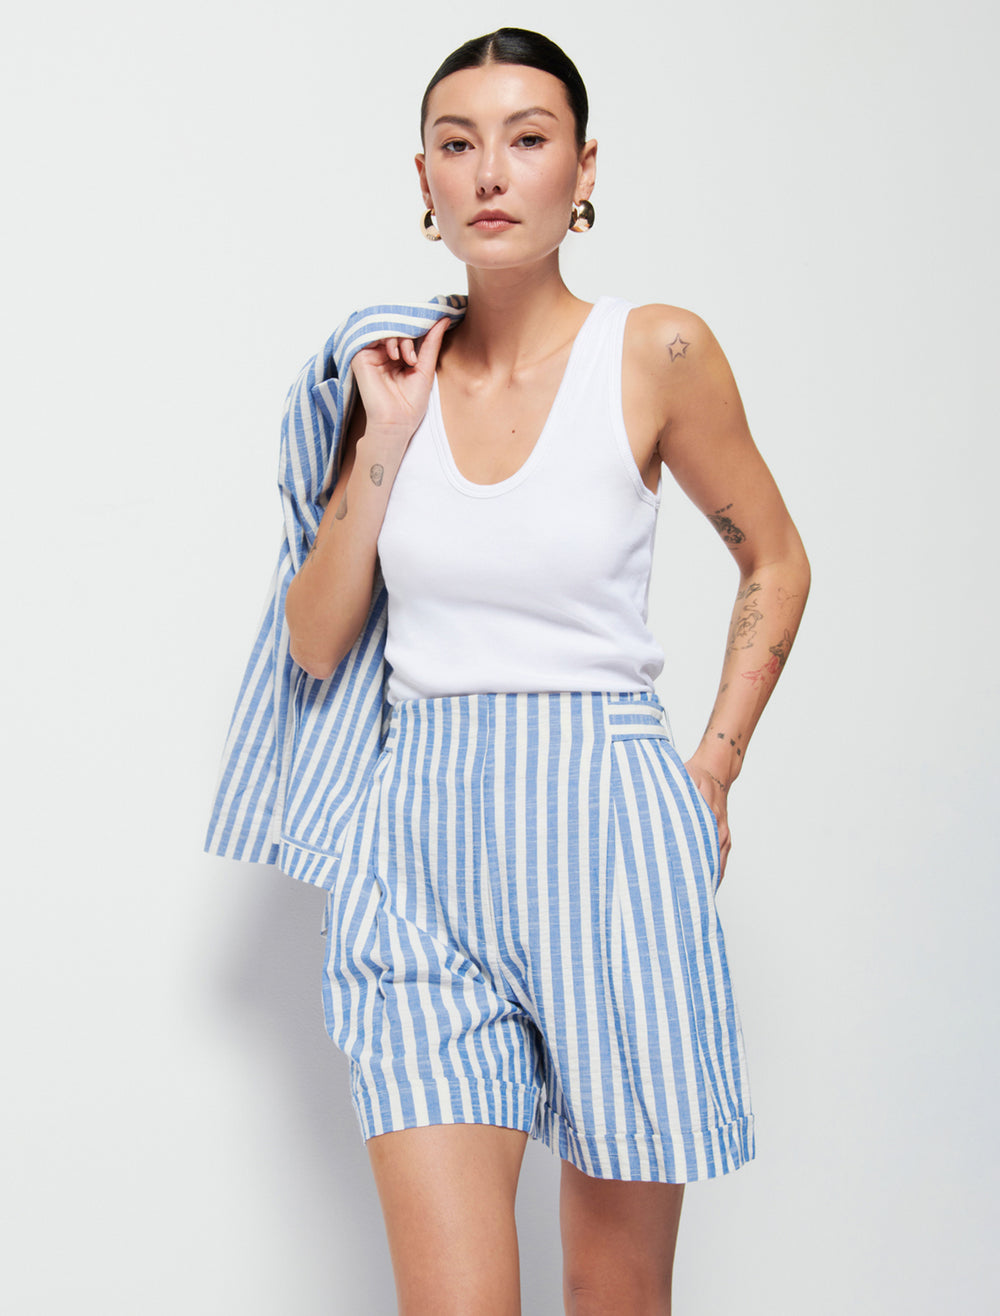 Model wearing Nation LTD's maja stripe short in parisian blue stripe.